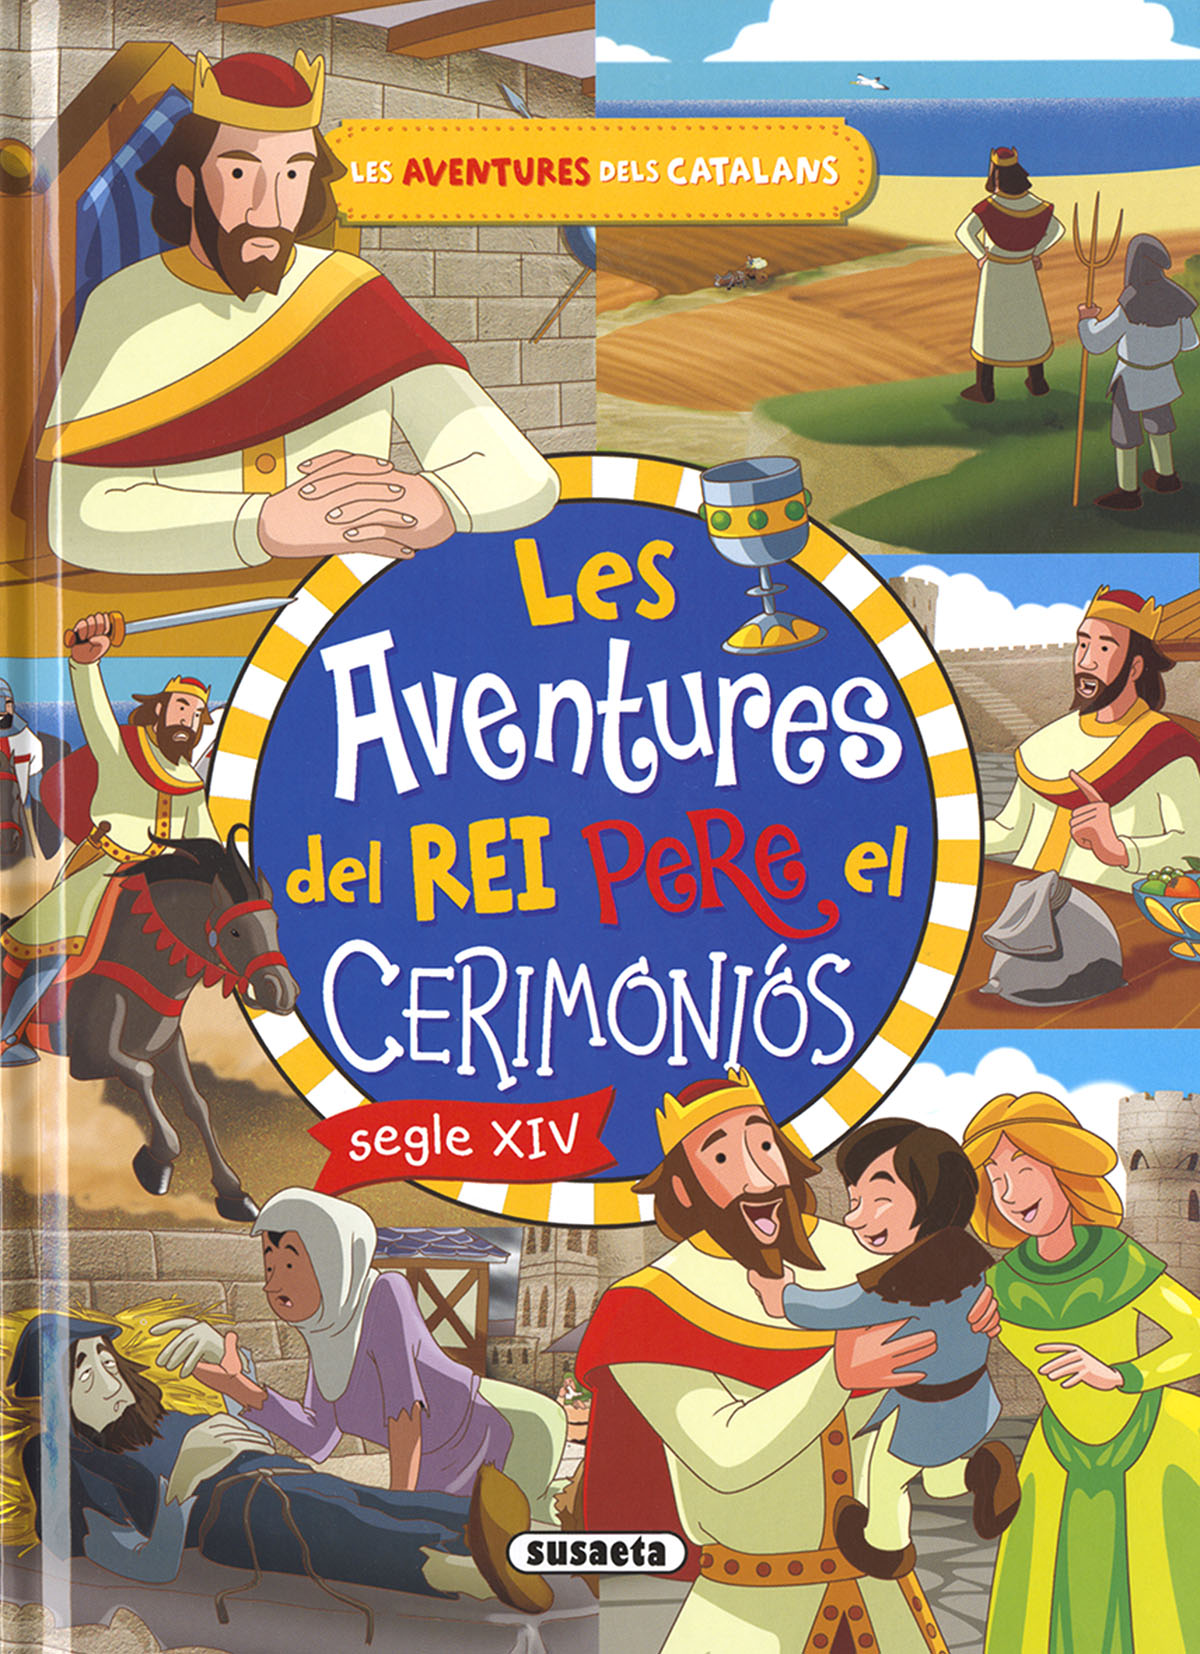 Les aventures del rei Pere el Cerimoniós